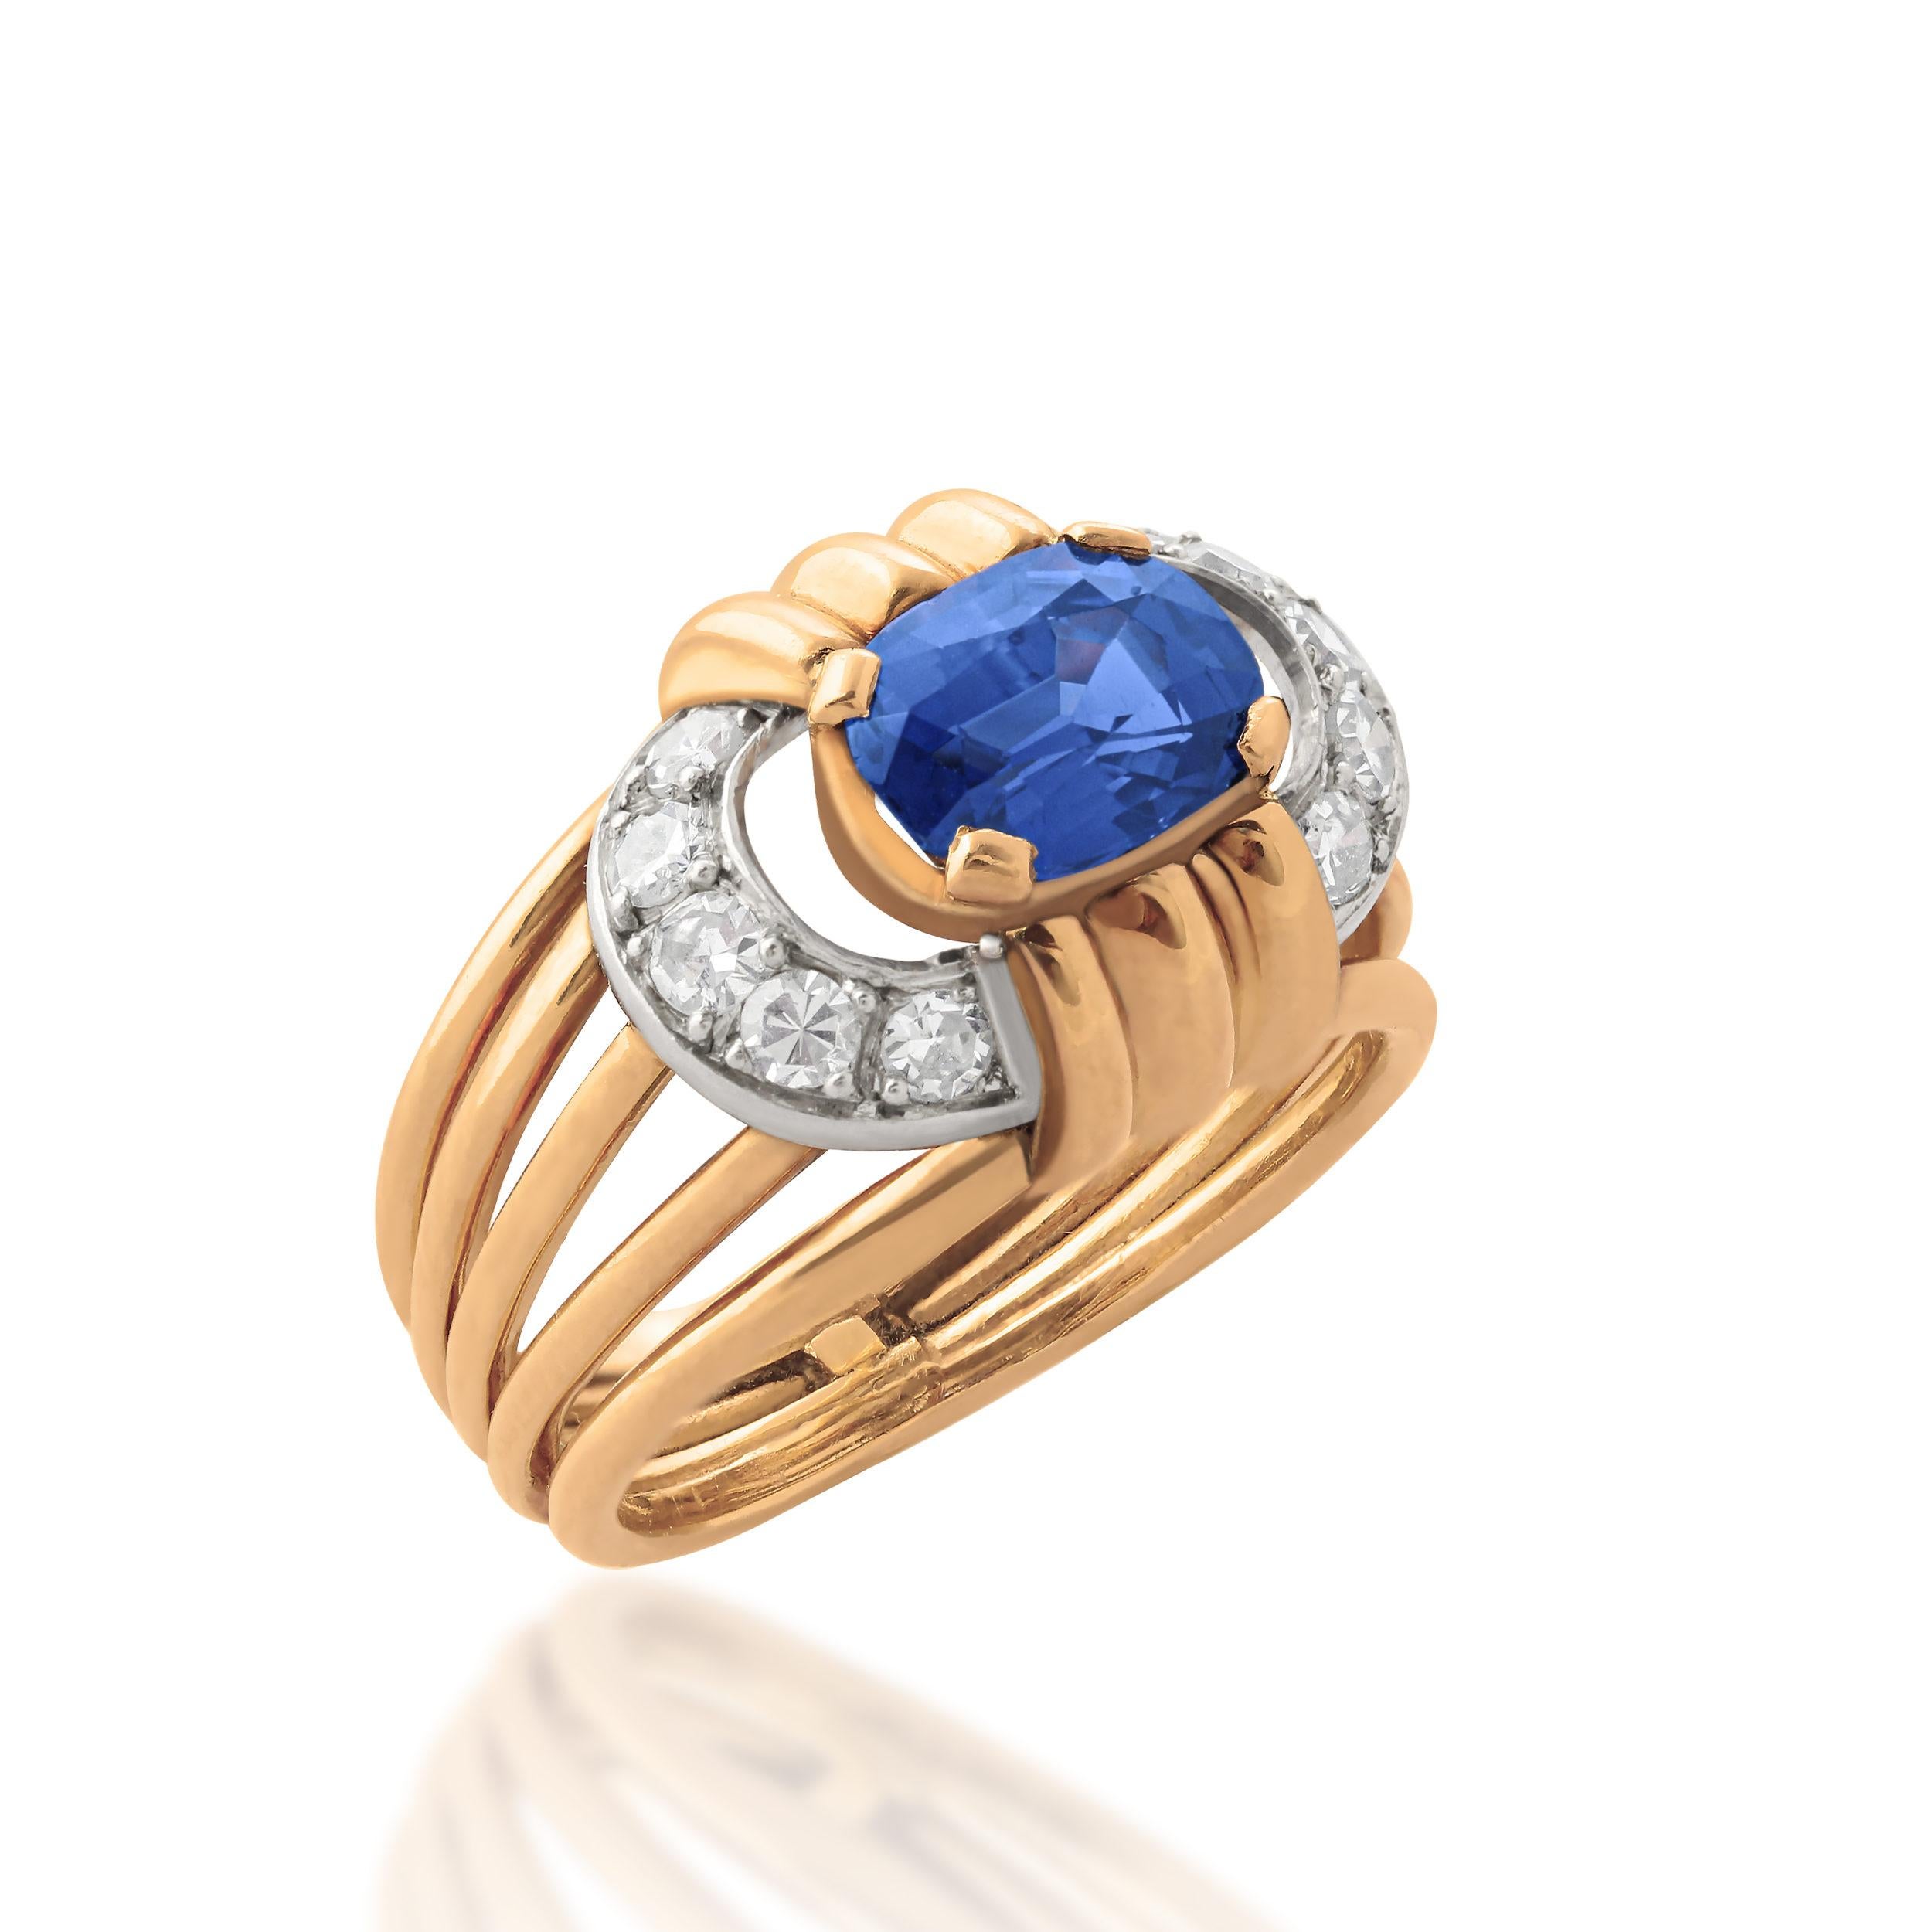 Oval Cut 18k Gold, Sapphire & Diamond Ring